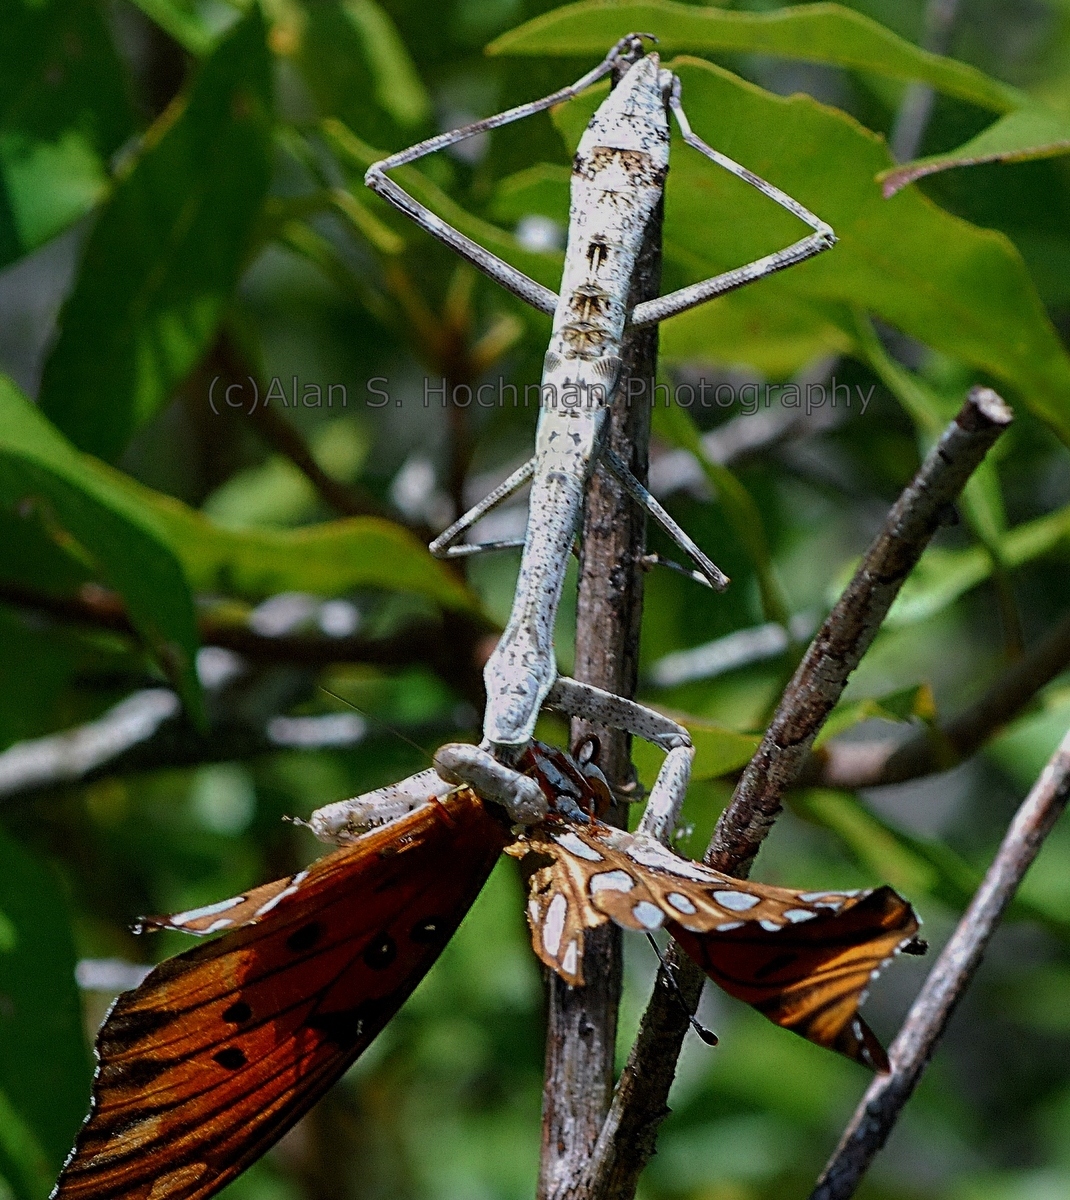 "Carolina Mantis eating Butterfly"